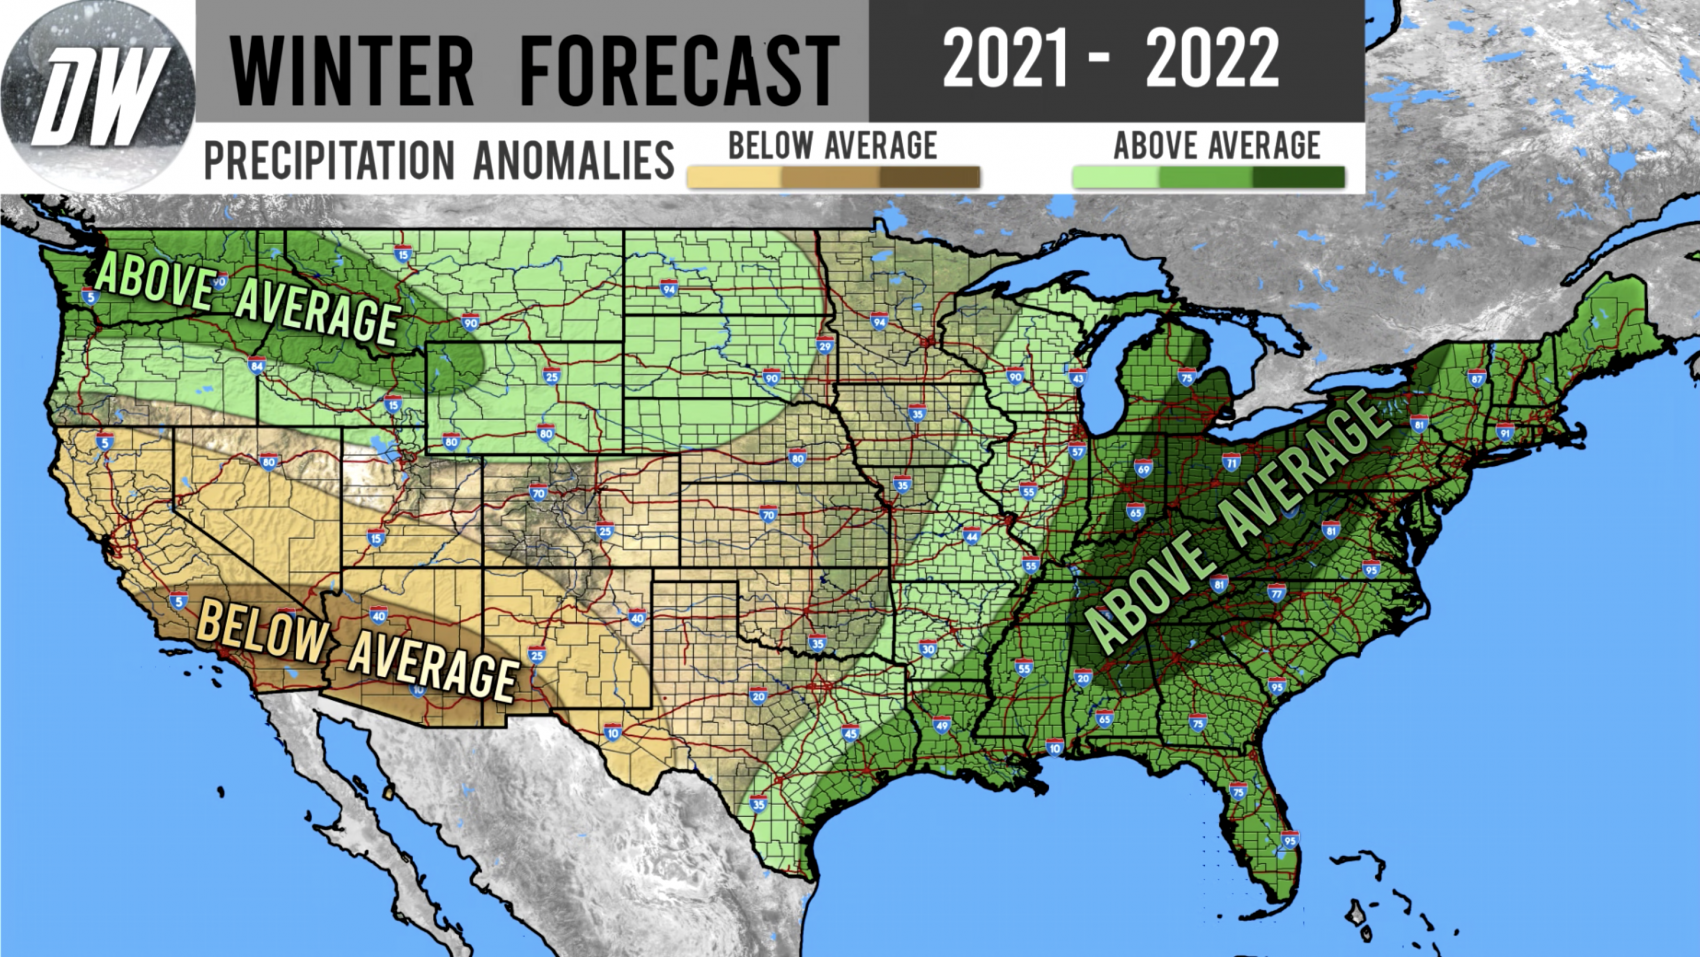 Winter Forecast 2021 - 2022 #2 